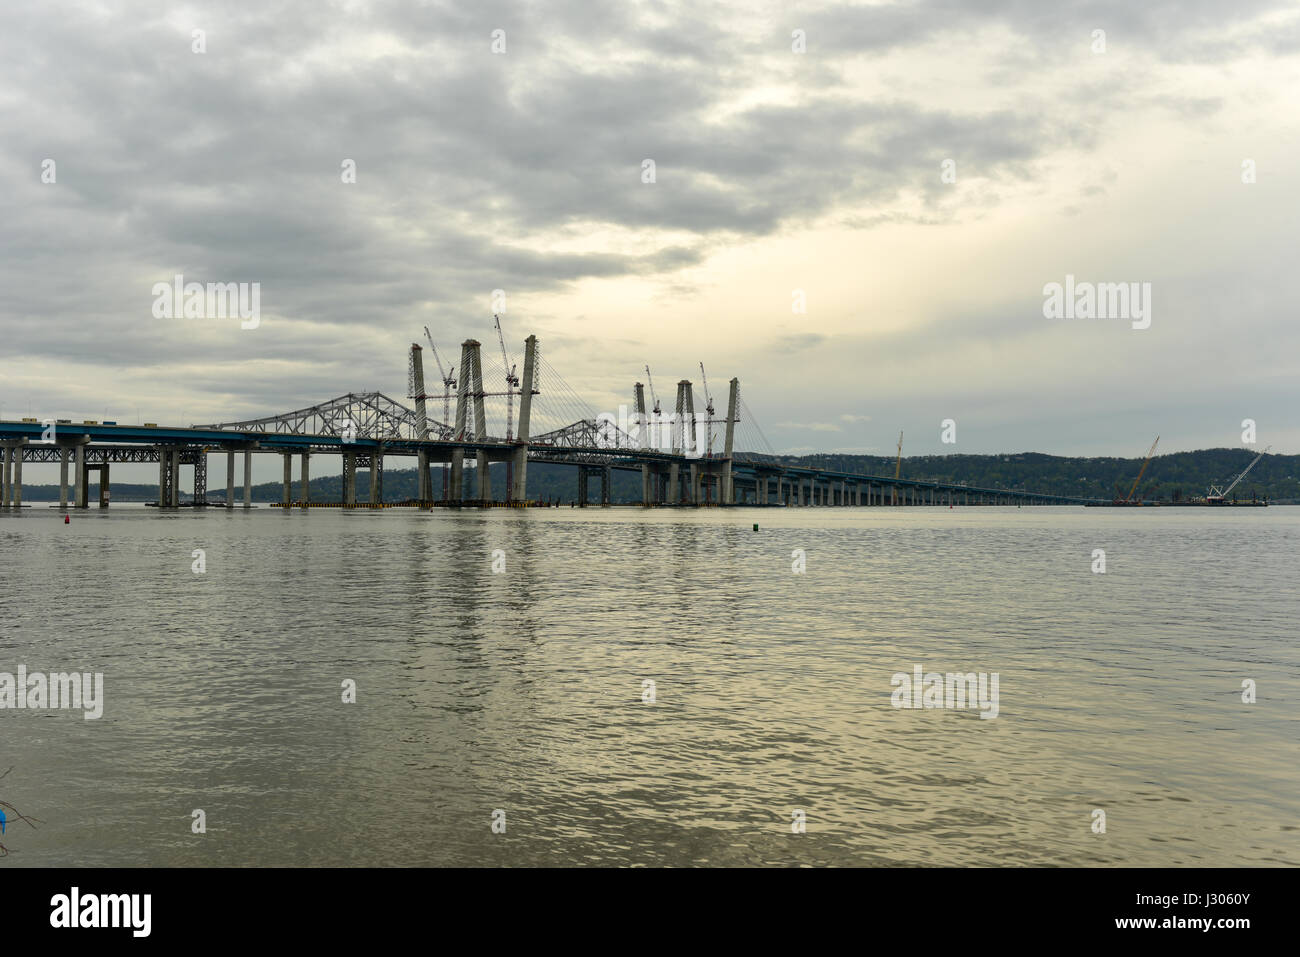 The new Tappan Zee bridge under construction across the Hudson River in New York. Stock Photo